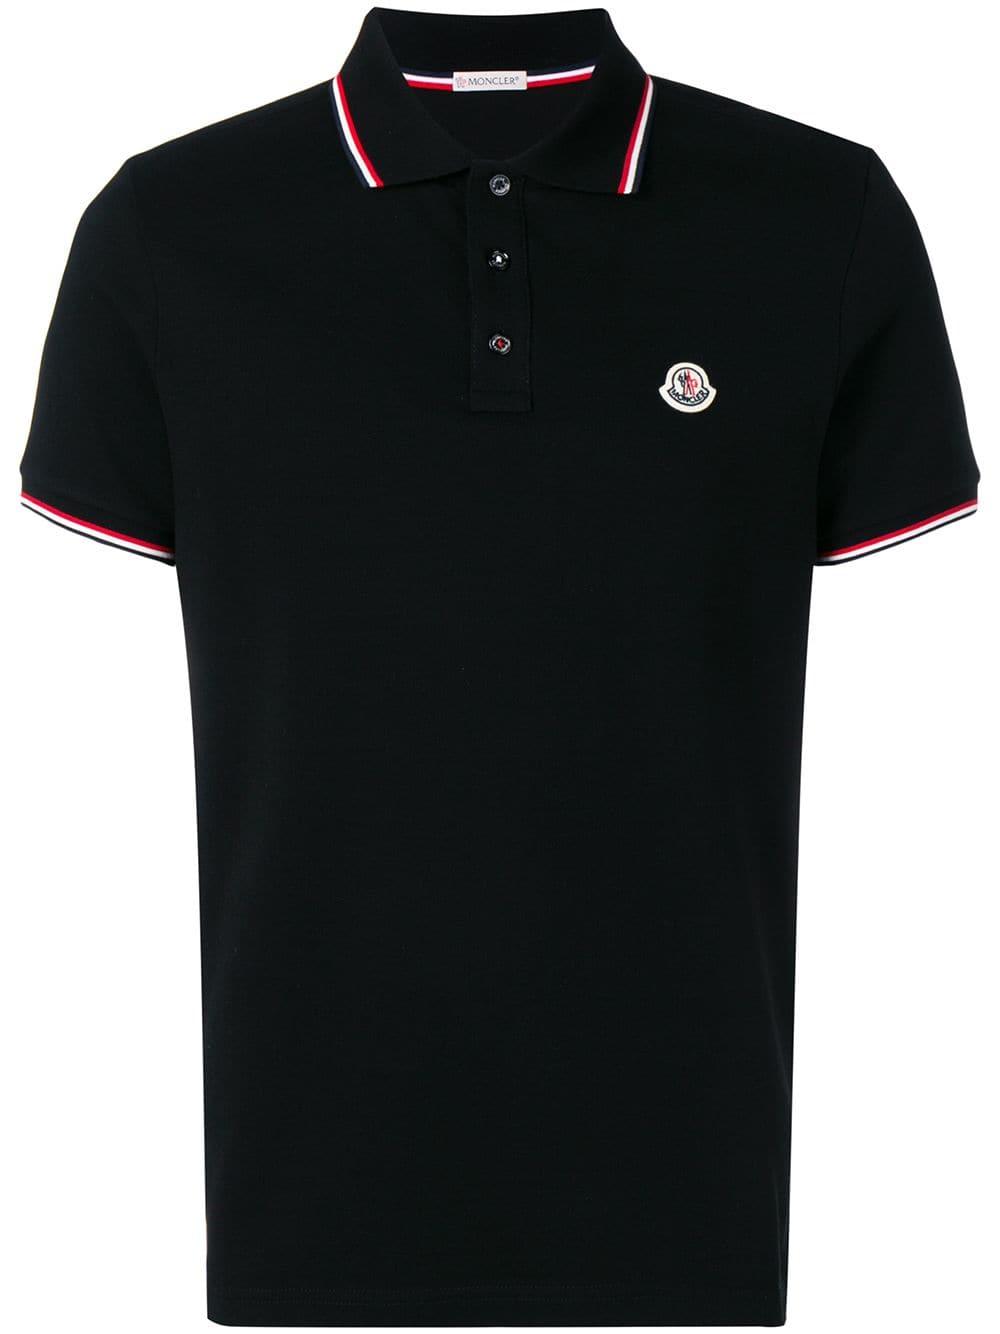 Moncler Classic Logo Polo Shirt in Black for Men - Lyst